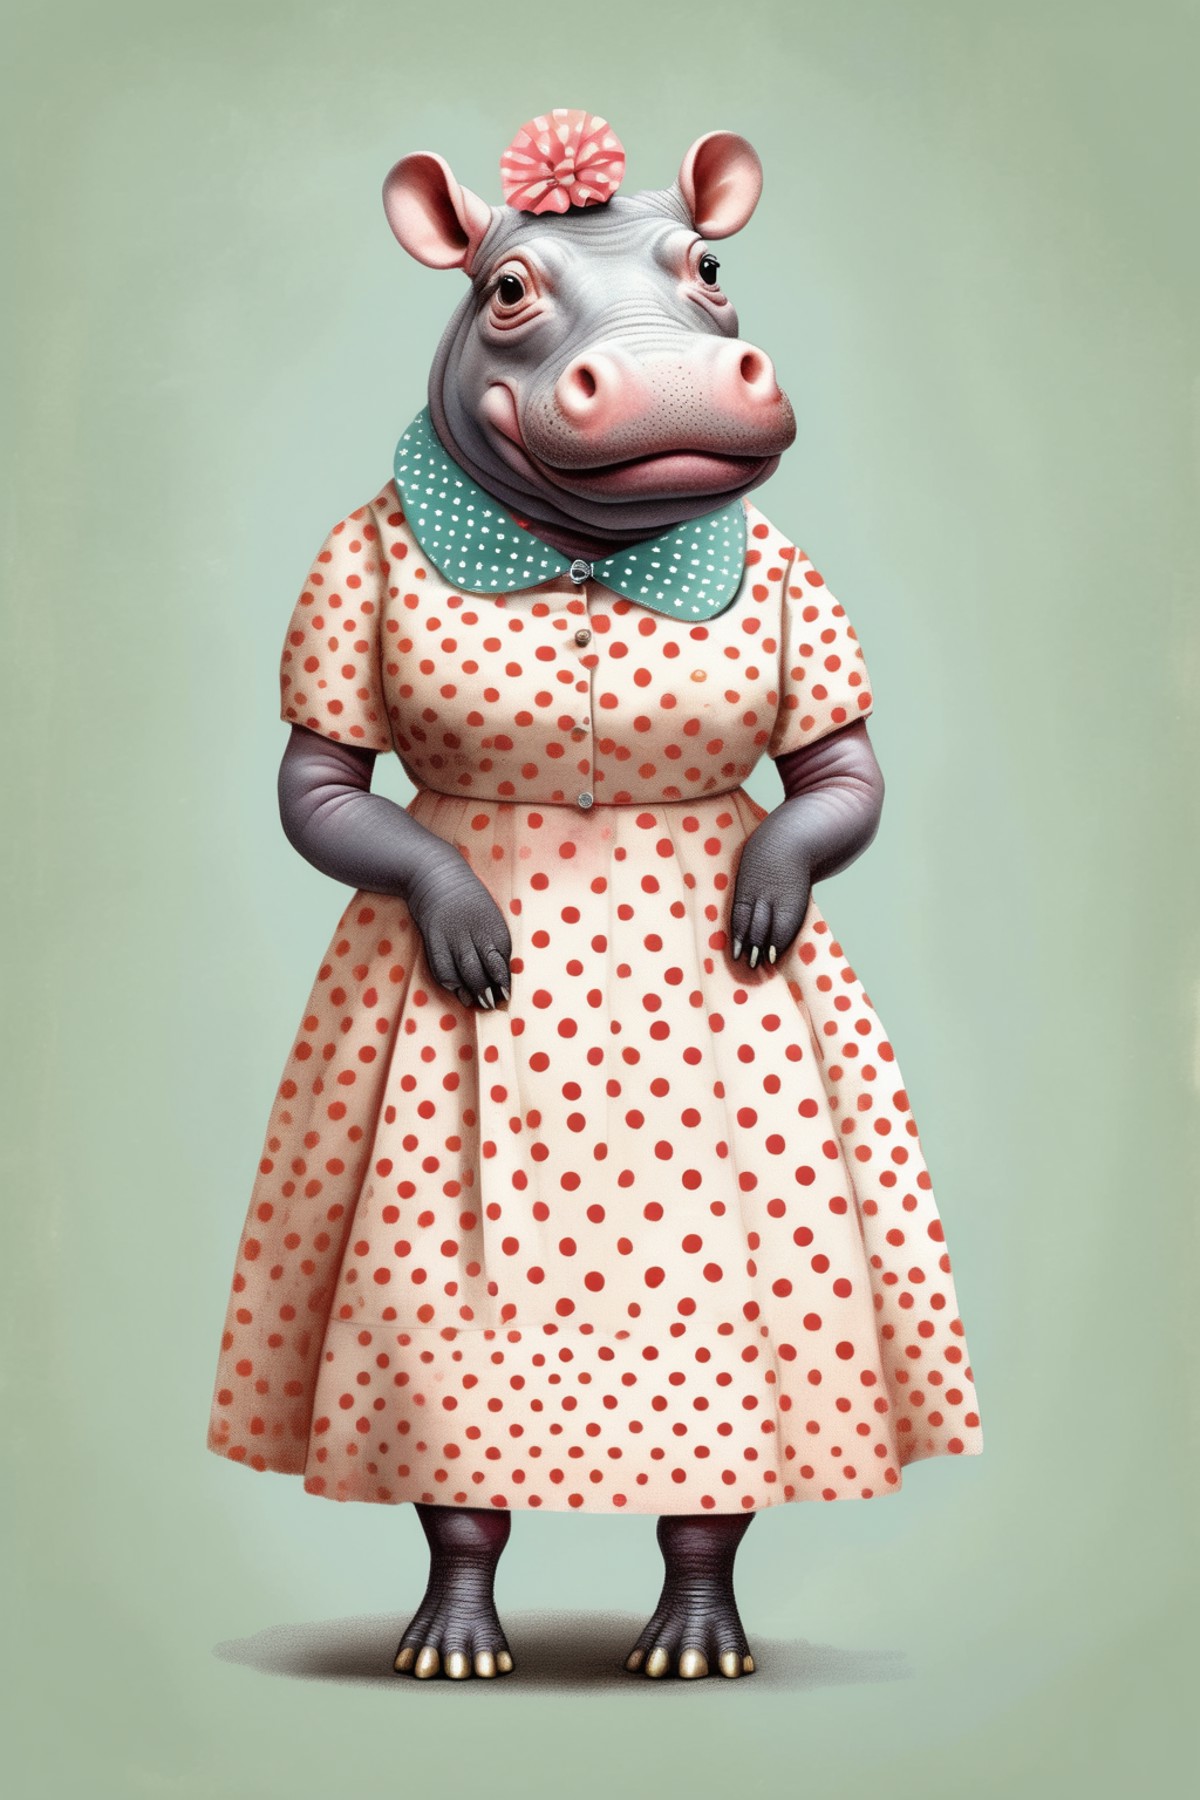 <lora:Dressed animals:1>Dressed animals - a hippo wearing a 1950s-style polkadot dress